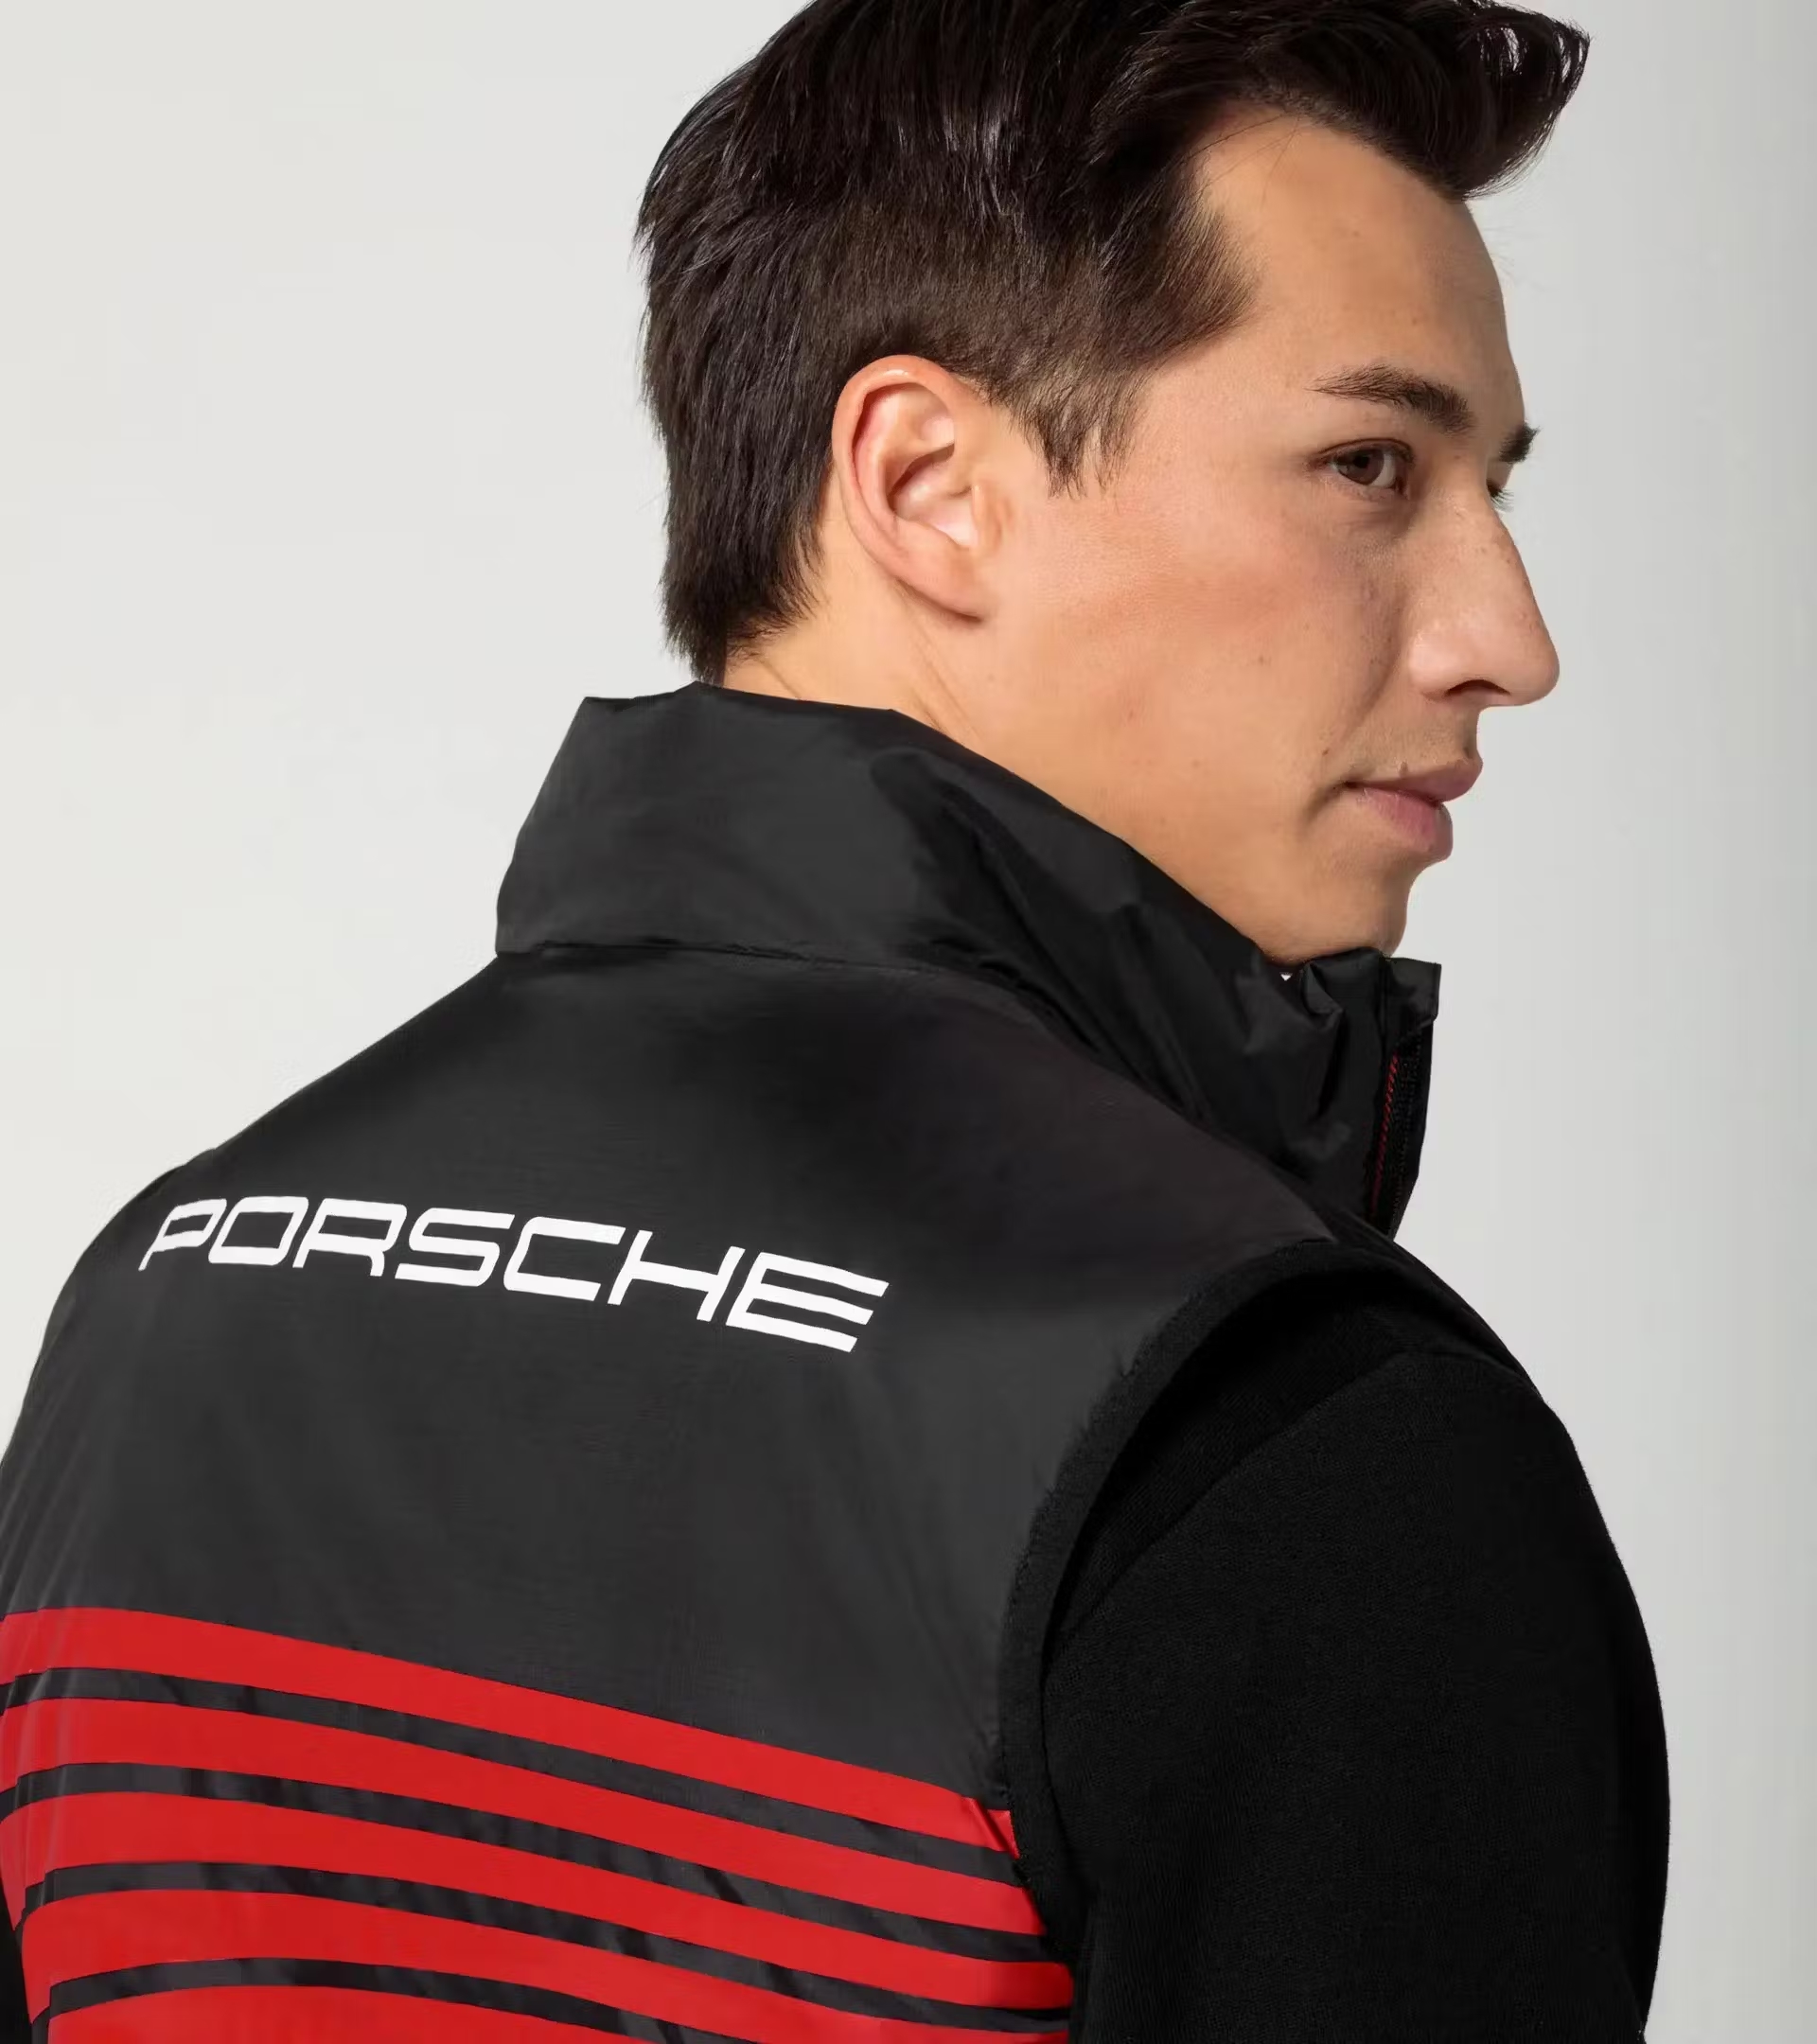 Gilet unisex – Porsche Penske Motorsport